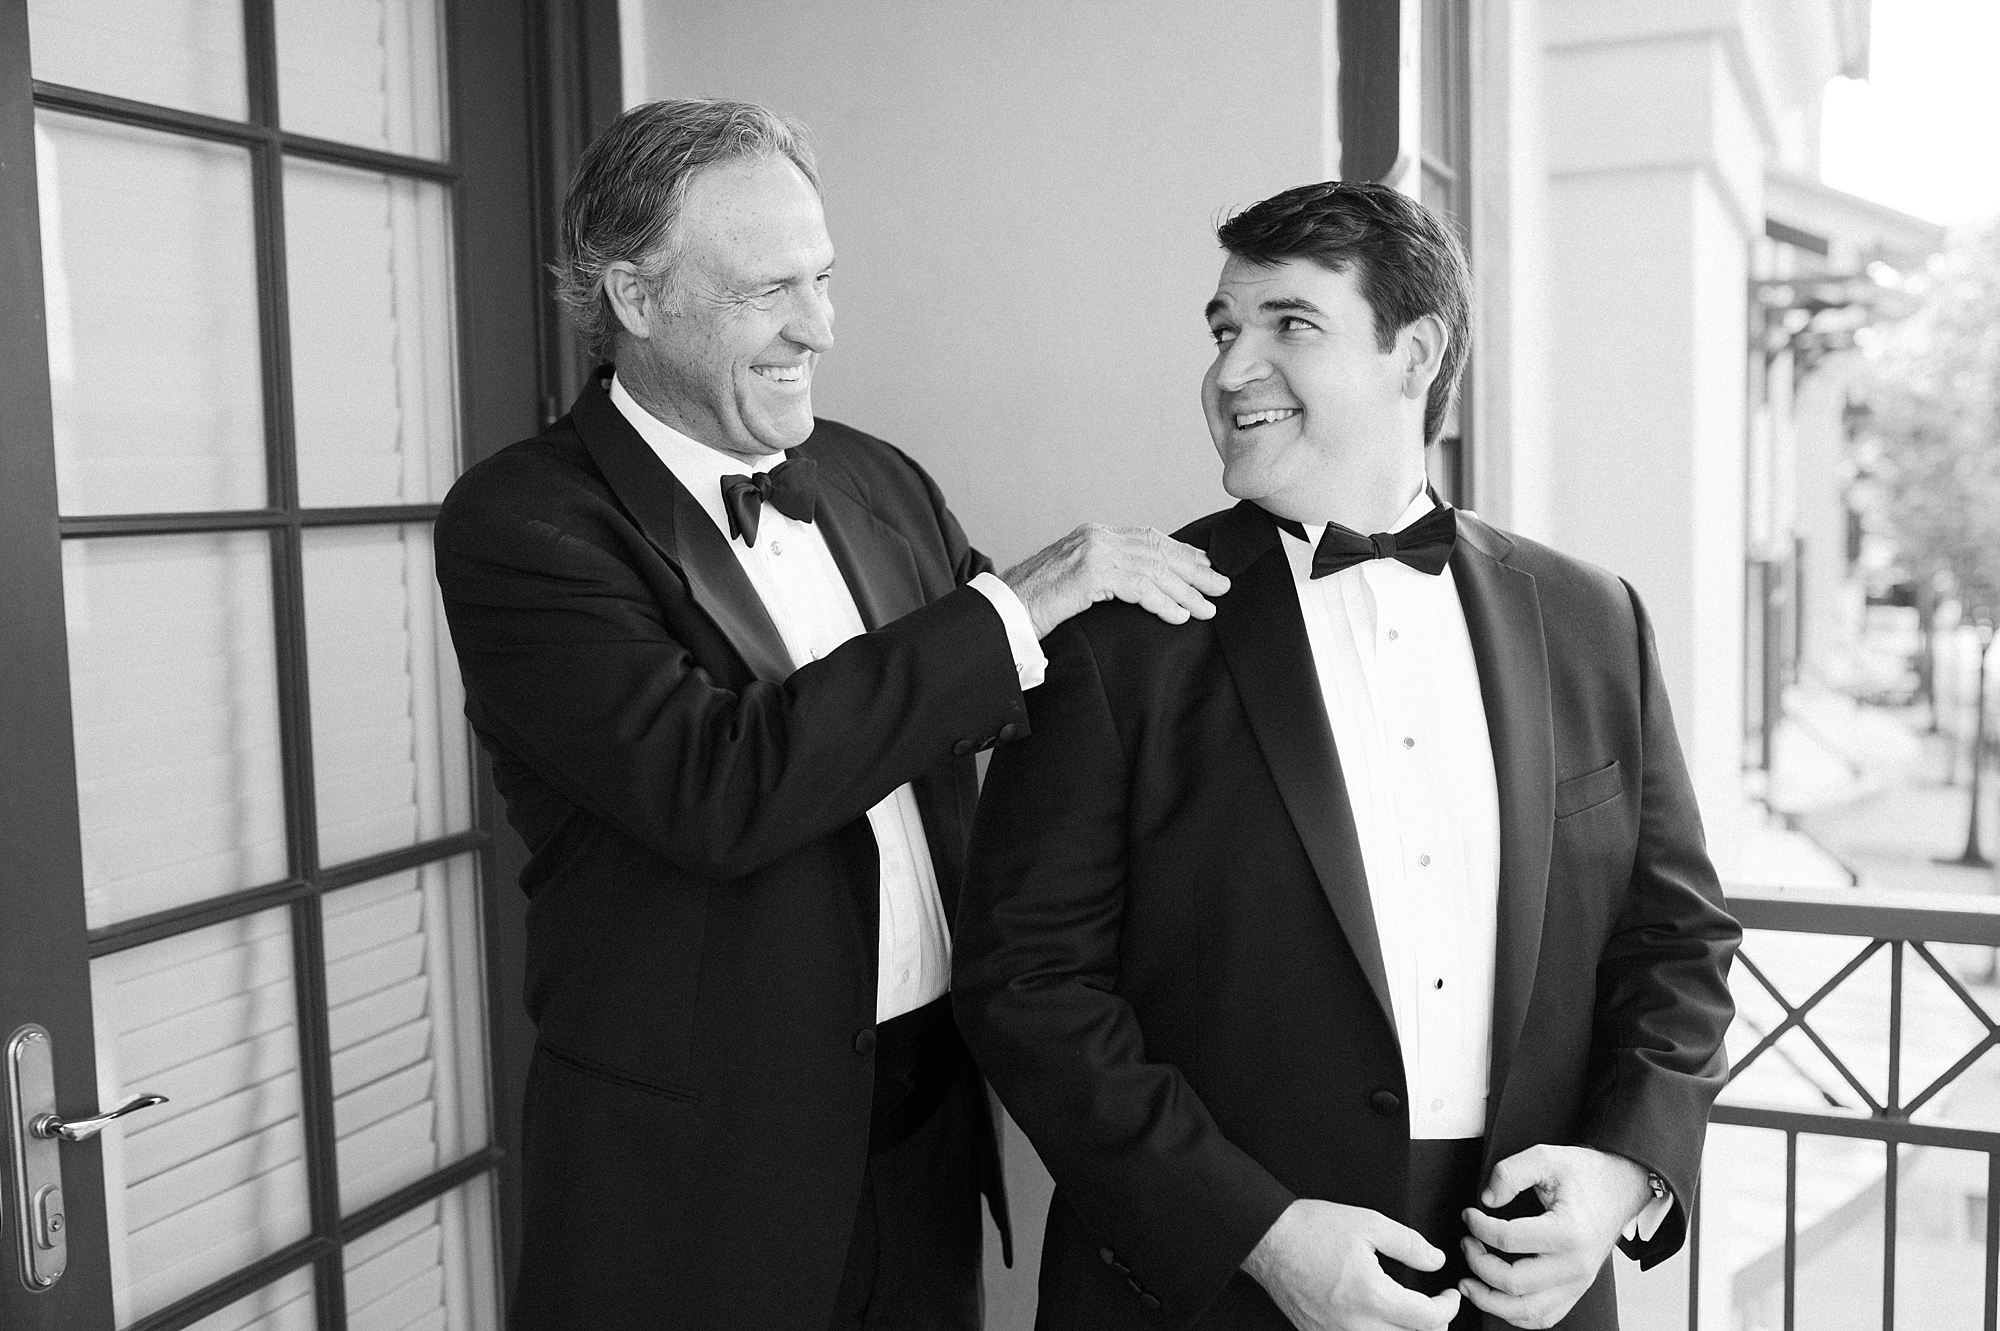 father helps groom adjust tie and suit jacket before Louisiana wedding